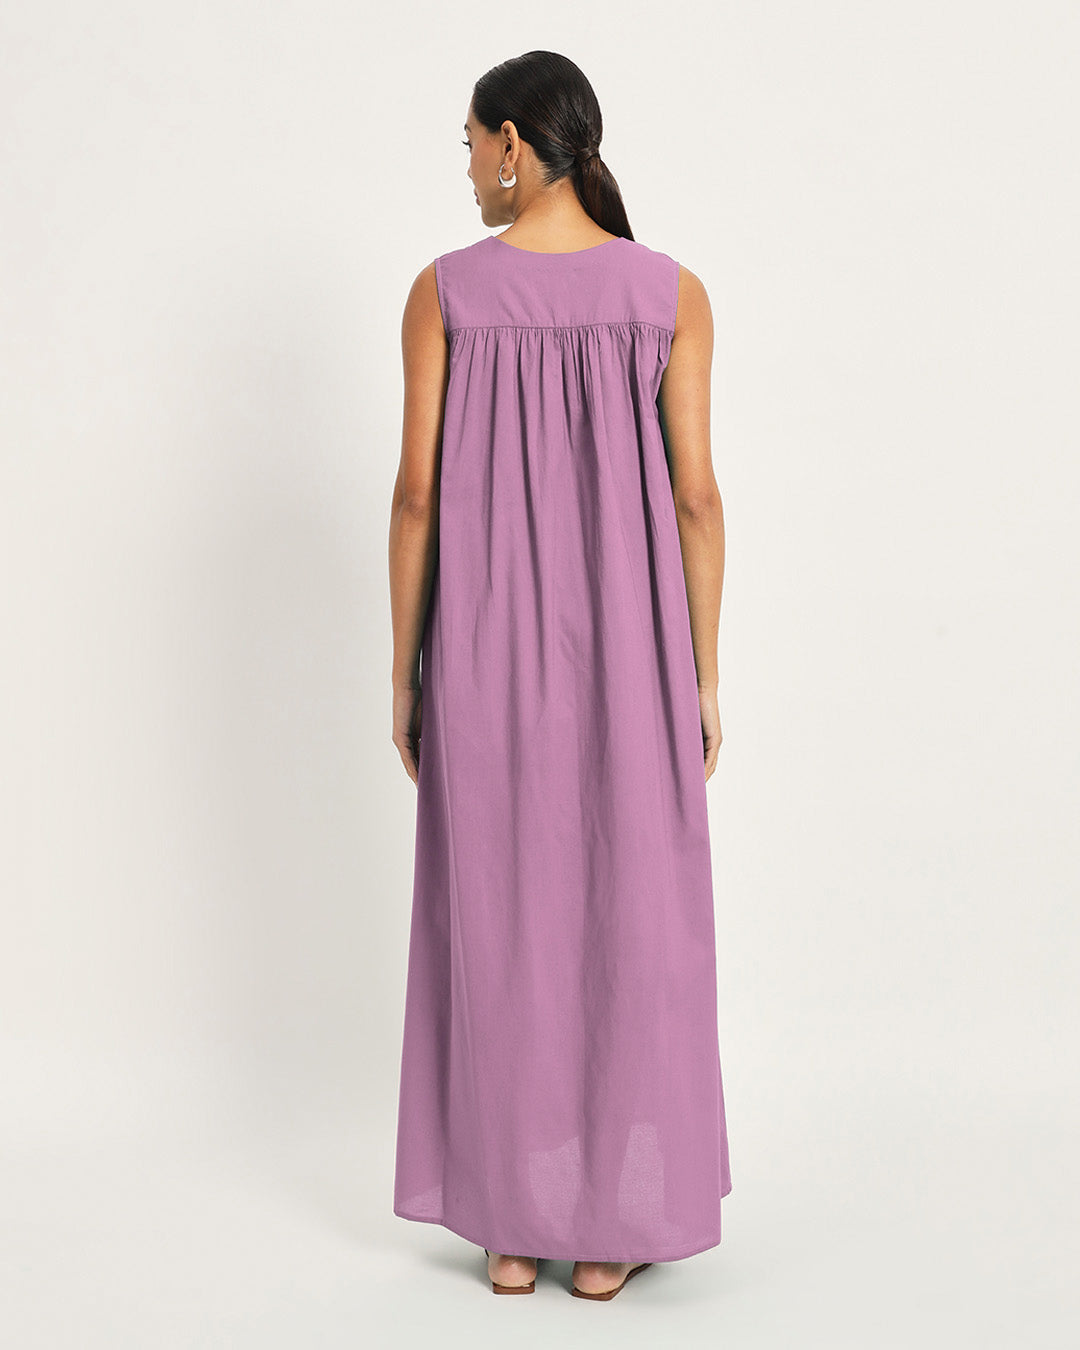 Combo: Classic Black & Iris Pink Restful Retreat Nightdress